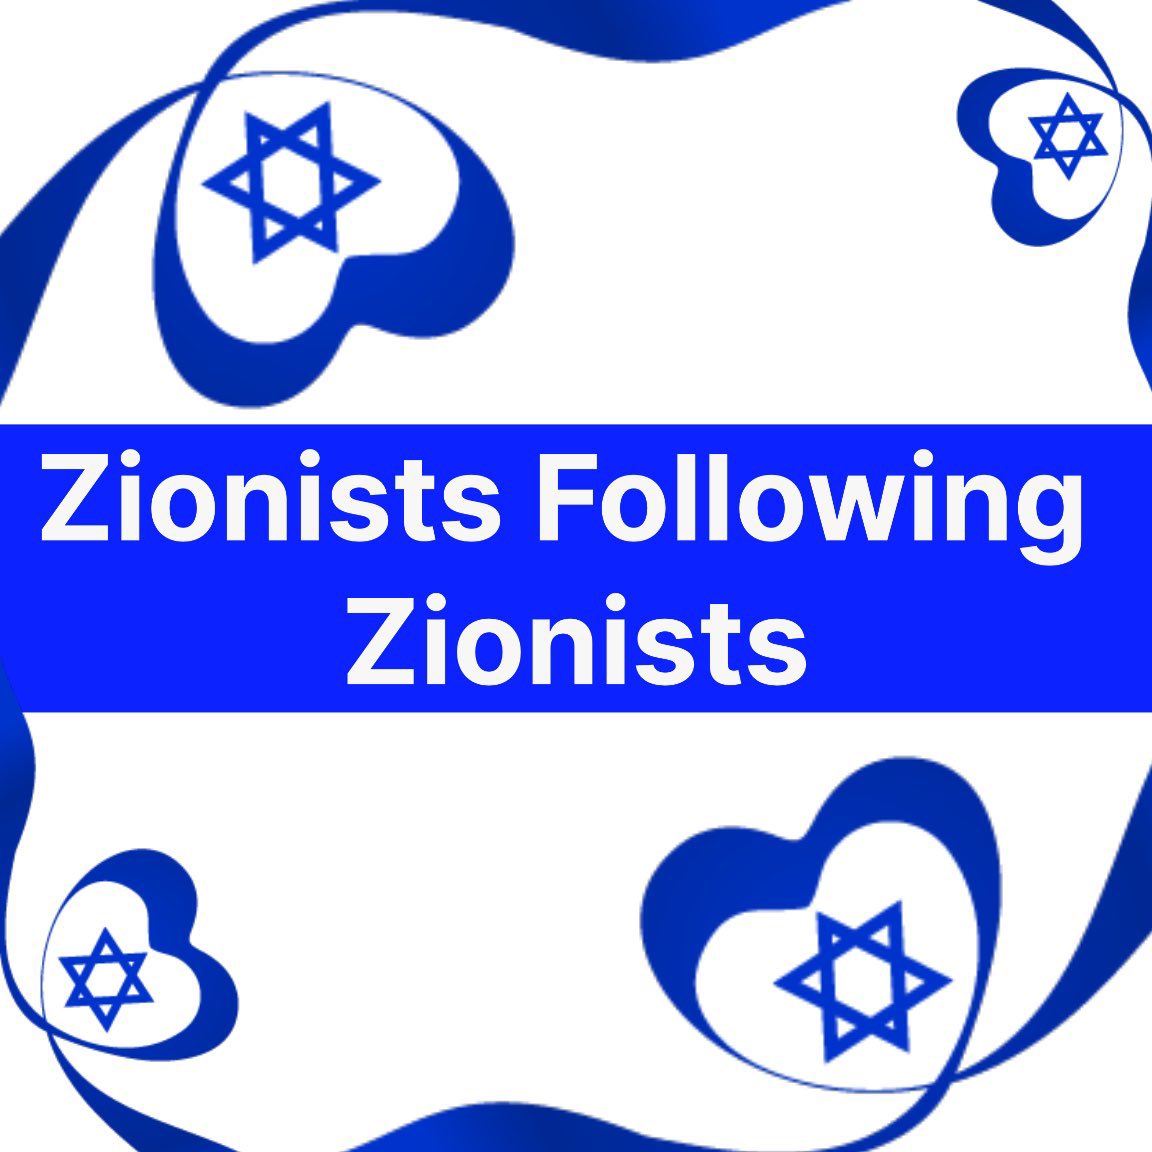 Boost #58 pro-Israel accounts under 1K. #ZionistsFollowZionists #StrongerTogether 🤍🇮🇱 🙏🏼

@JoshuaPrzyborow 
@WSuperfitfan 
@SannaArnstrom
@dfinfer
@tizzlenews  
@snarkasaurusr3x 
@phillyprosper 
@admiralswalk 
@dhaar99 
@Jack2Shady
@kristidkerr2 
@lcohenmurray